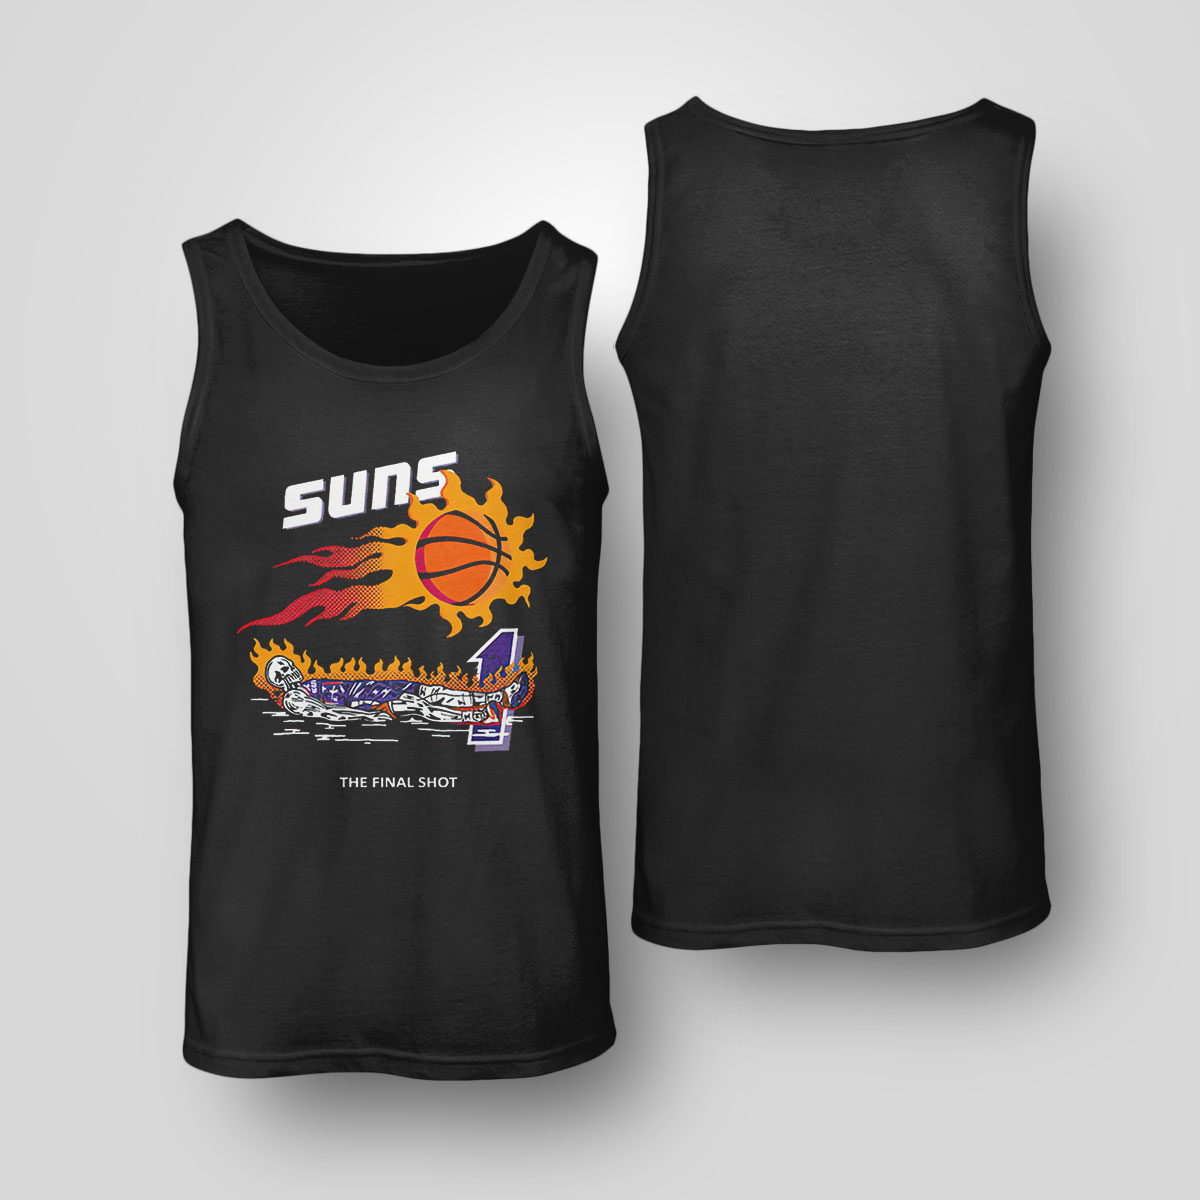 Devin Booker Warren Lotas Final Shot authetic shirt Phoenix Suns